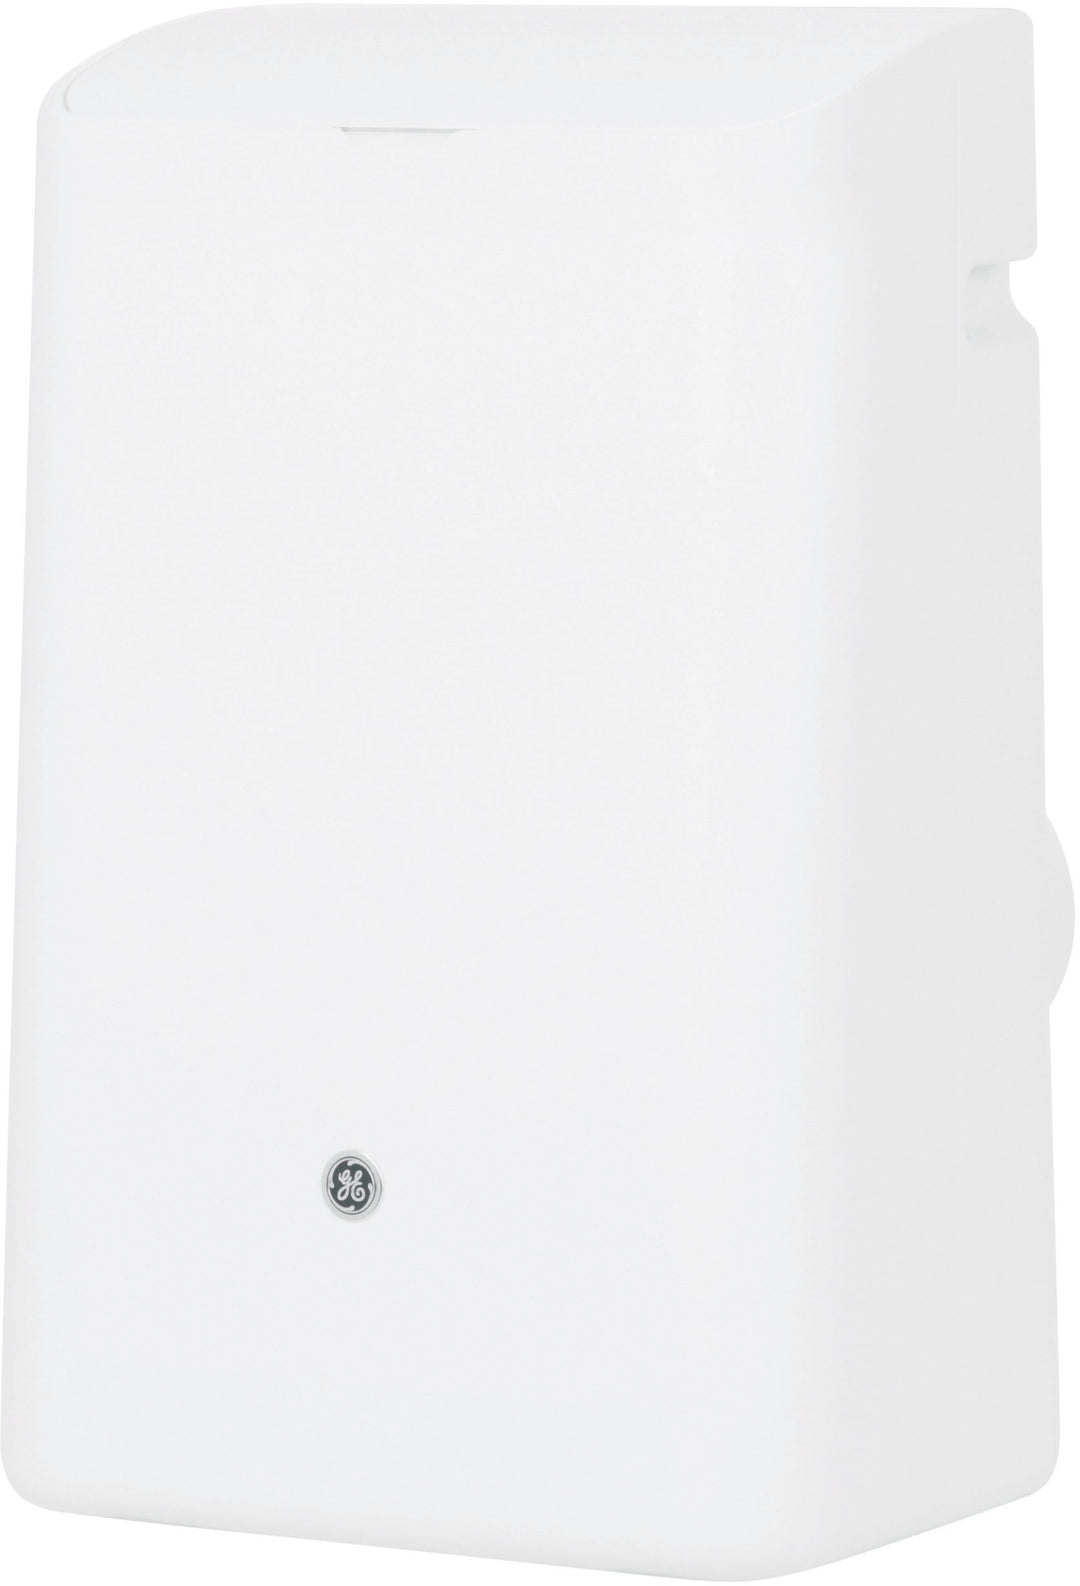 GE - 450 Sq. Ft. 10400 BTU Smart Portable Air Conditioner - White_0